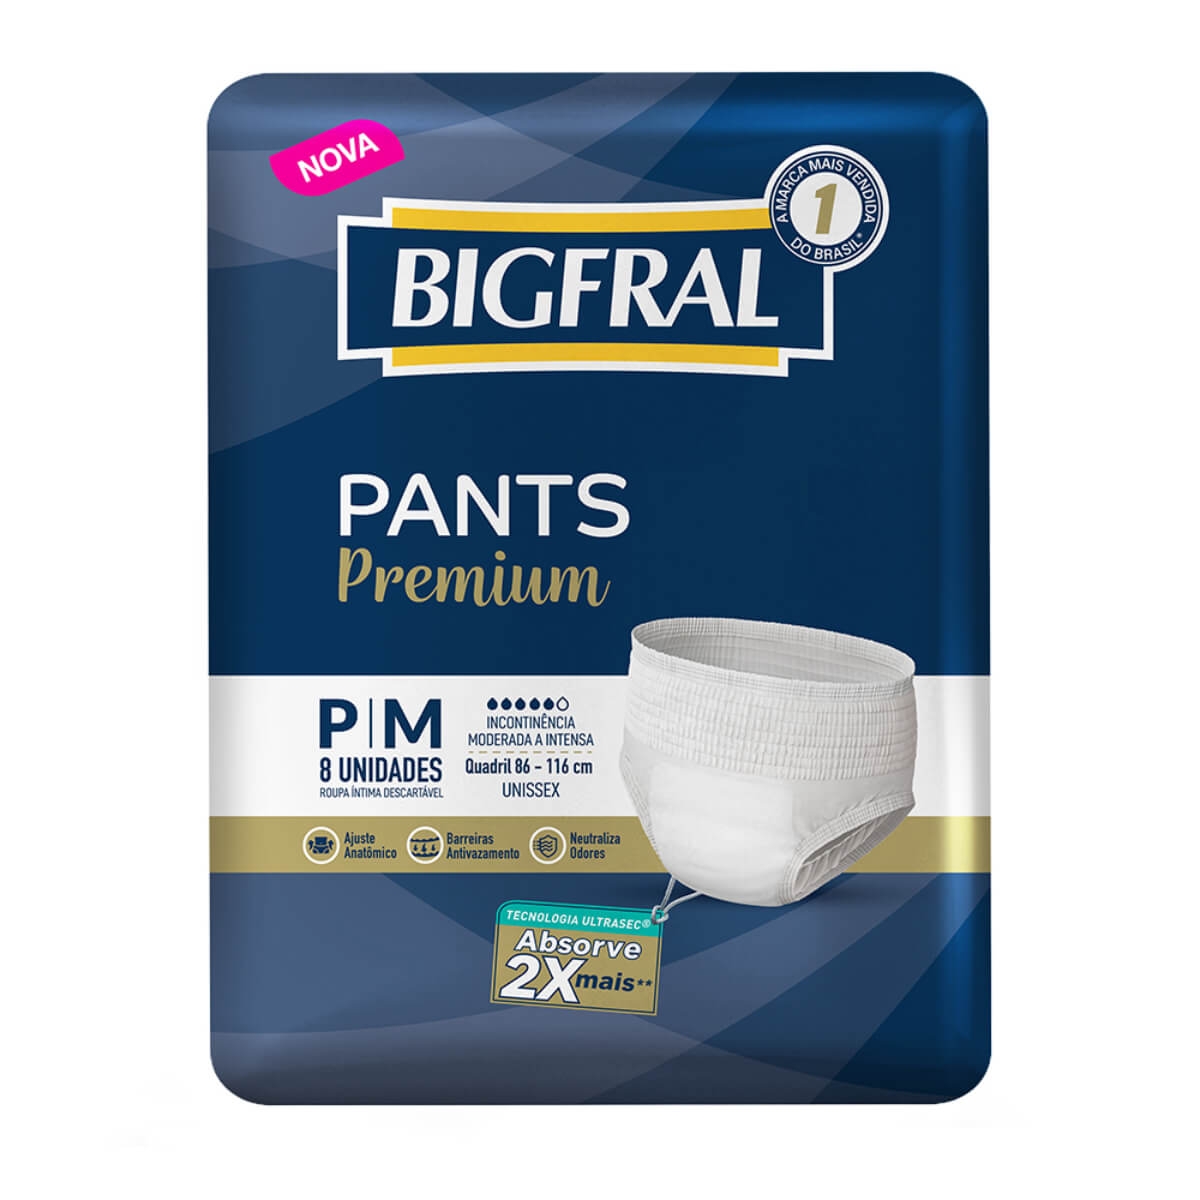 Roupa Íntima Bigfral Pants Premium Tamanho P/M 8 Unidades